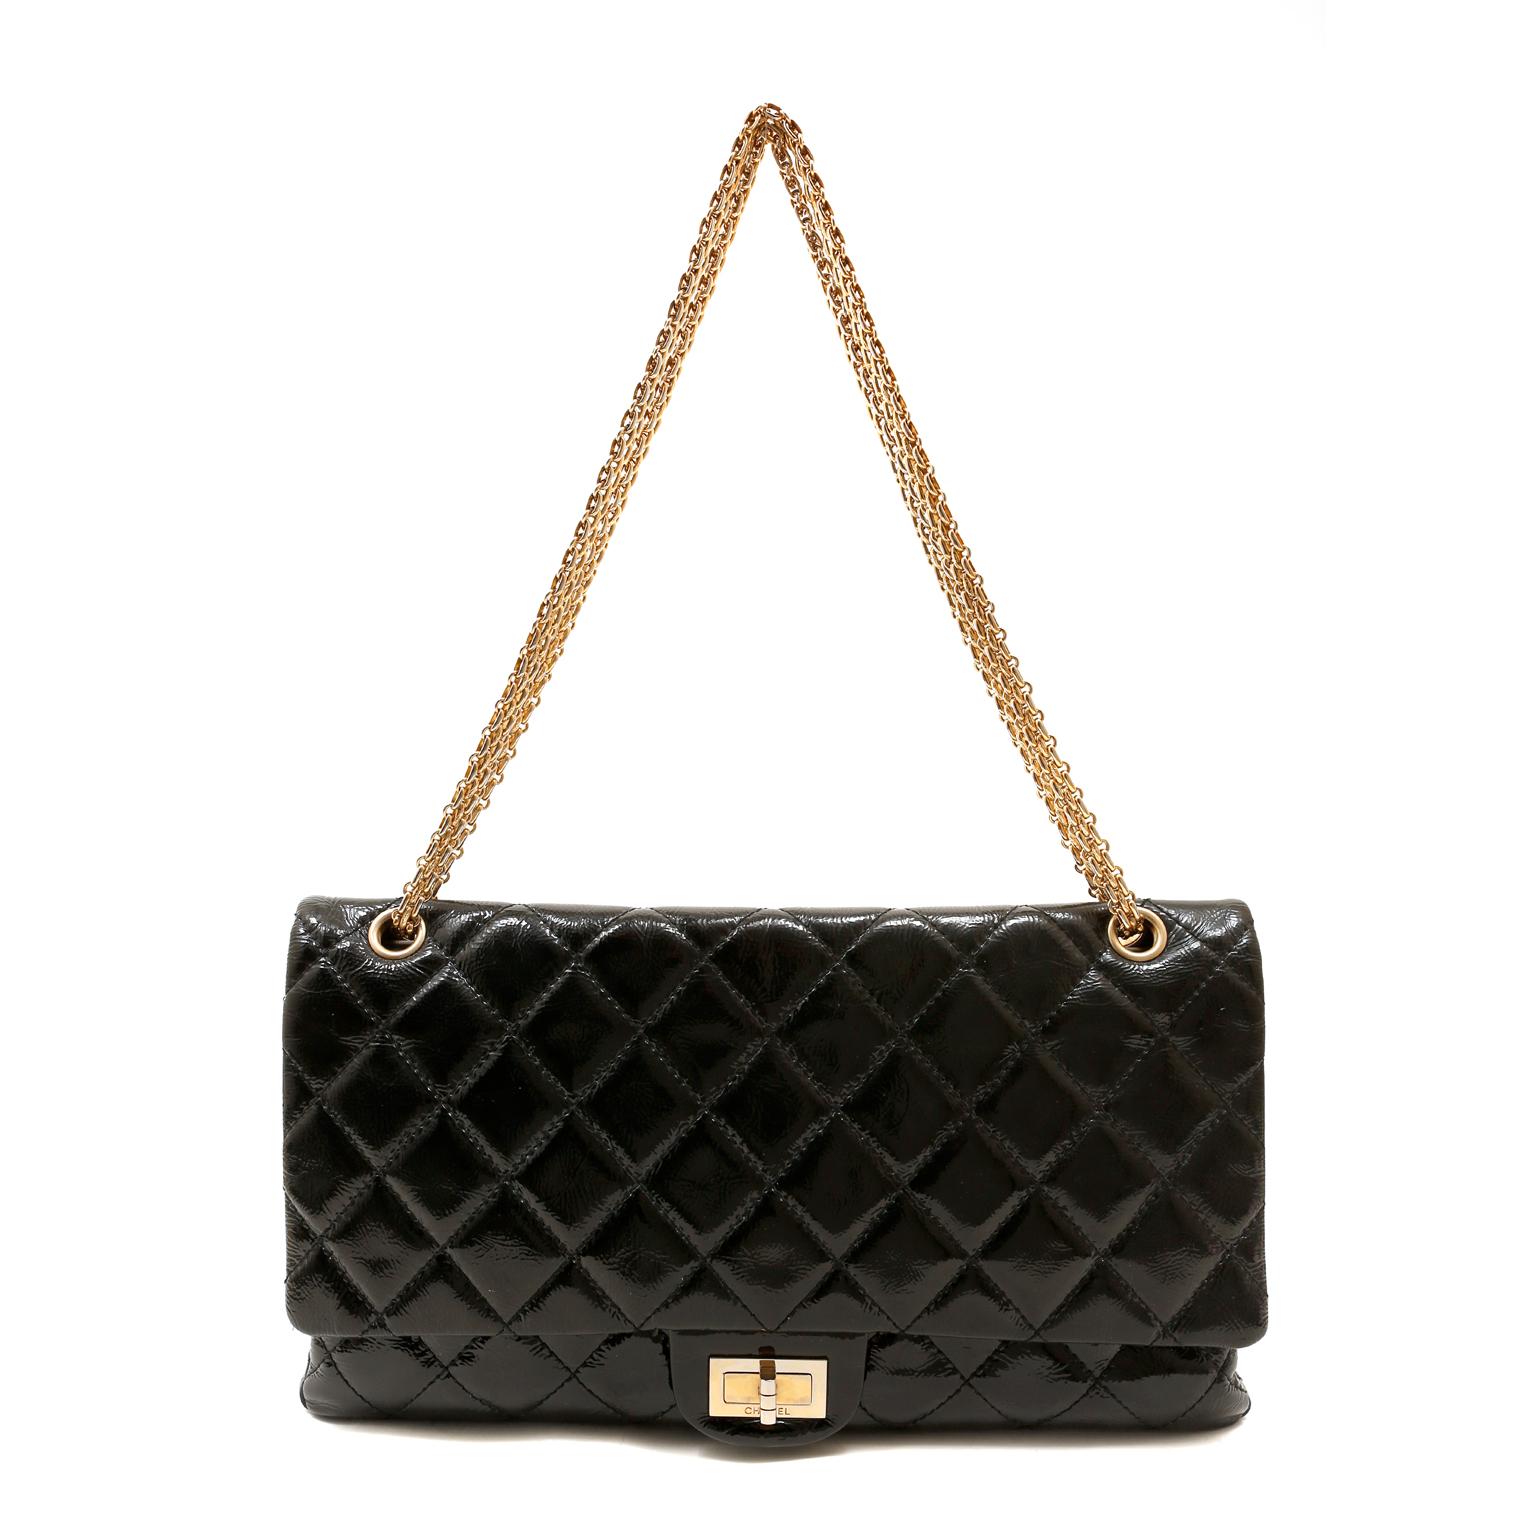 Women's Chanel Black Patent Leather Reissue Maxi Flap Bag 228 size